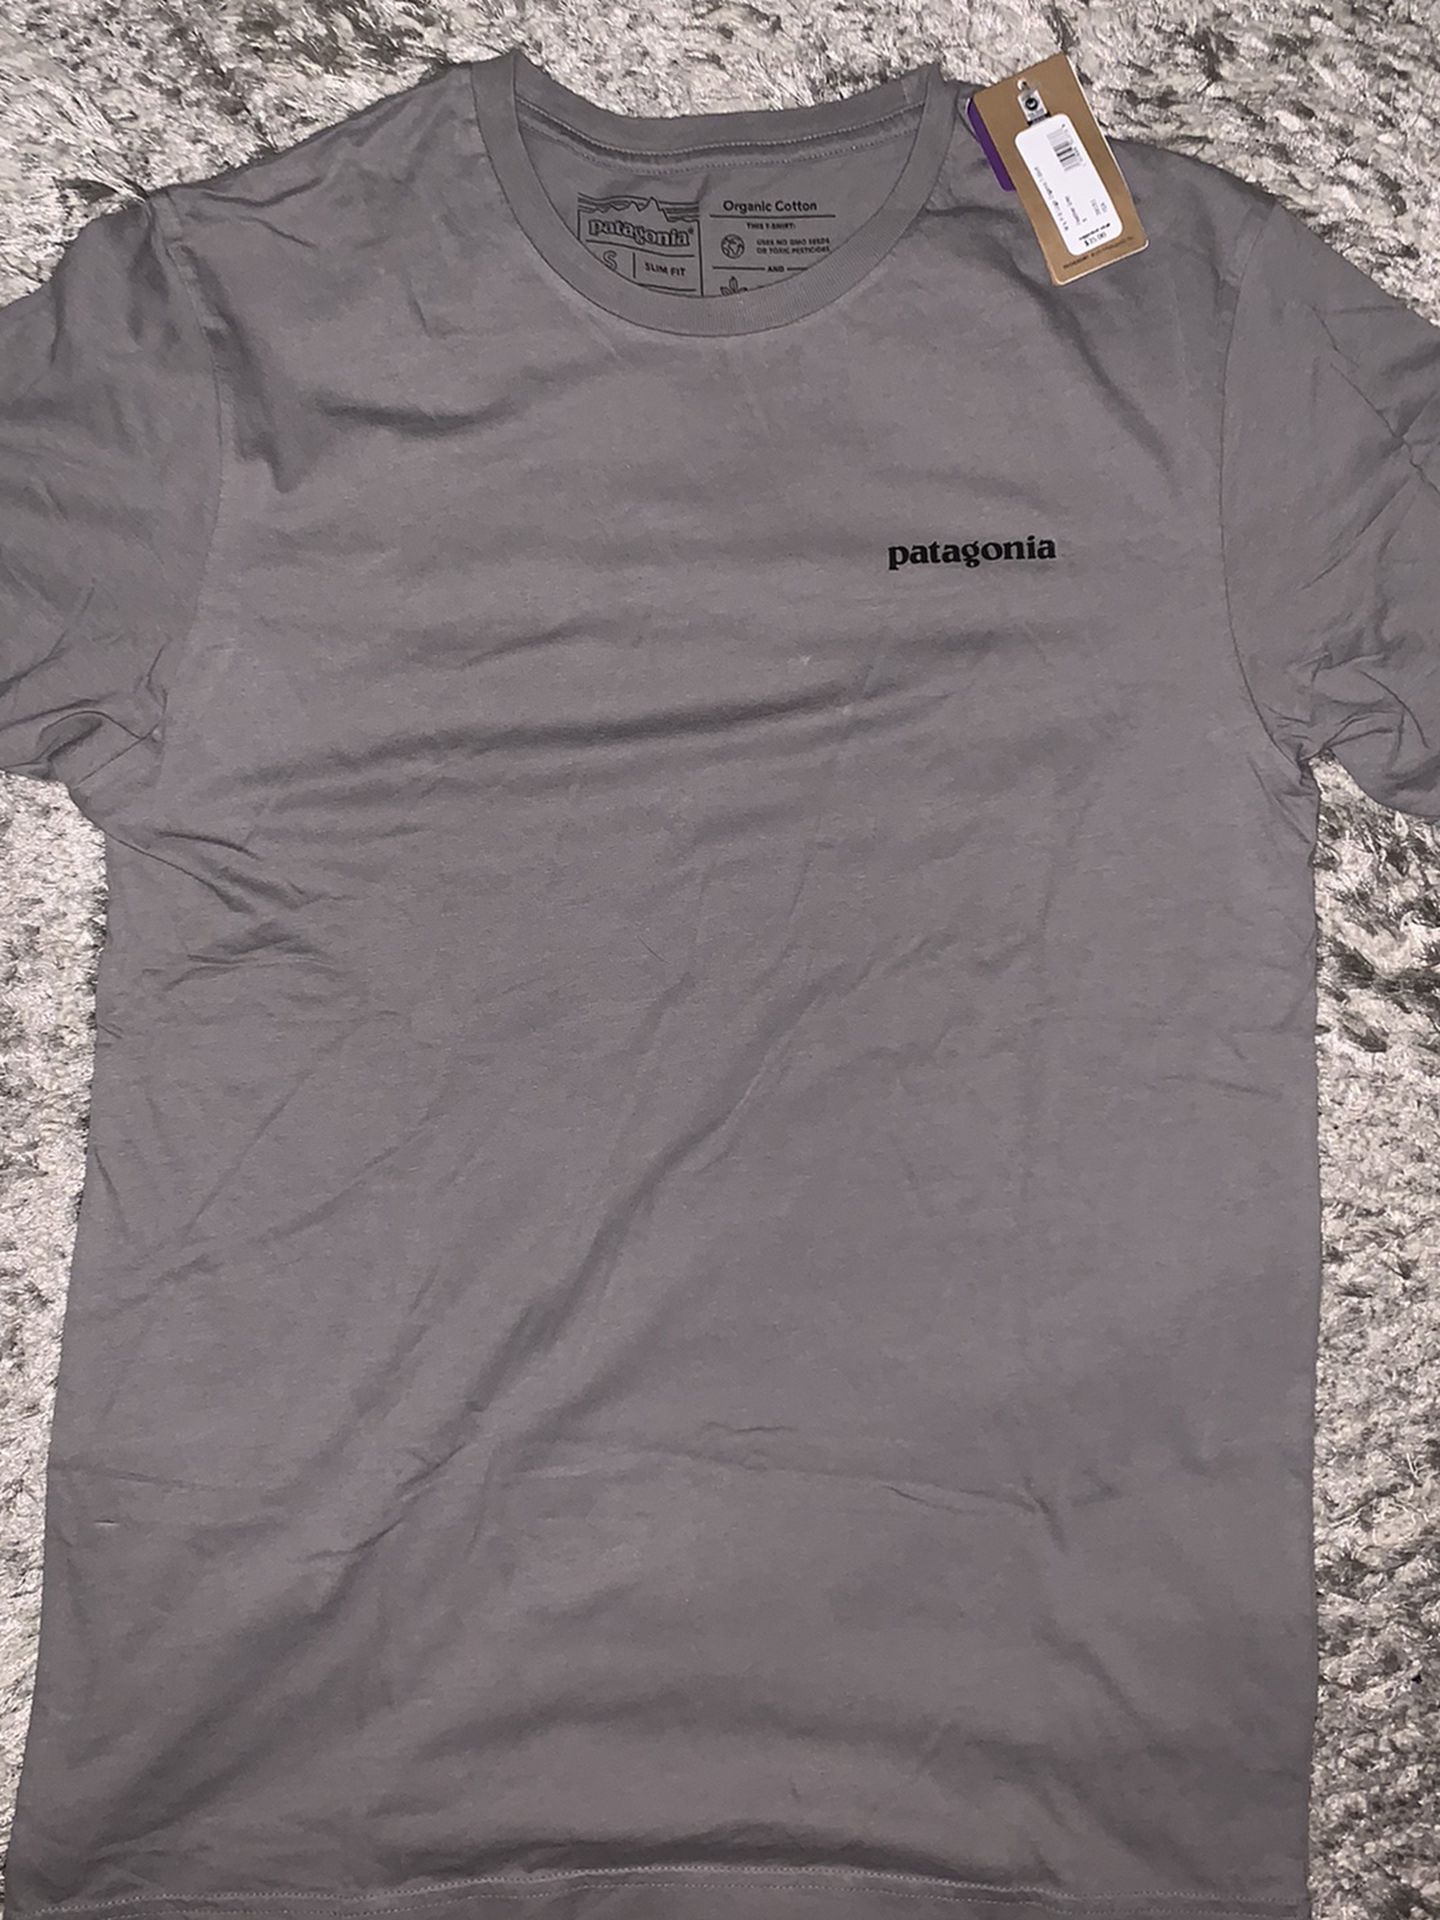 NEW Patagonia Men’s Gray S/S Logo T Shirt Slim Fit Small